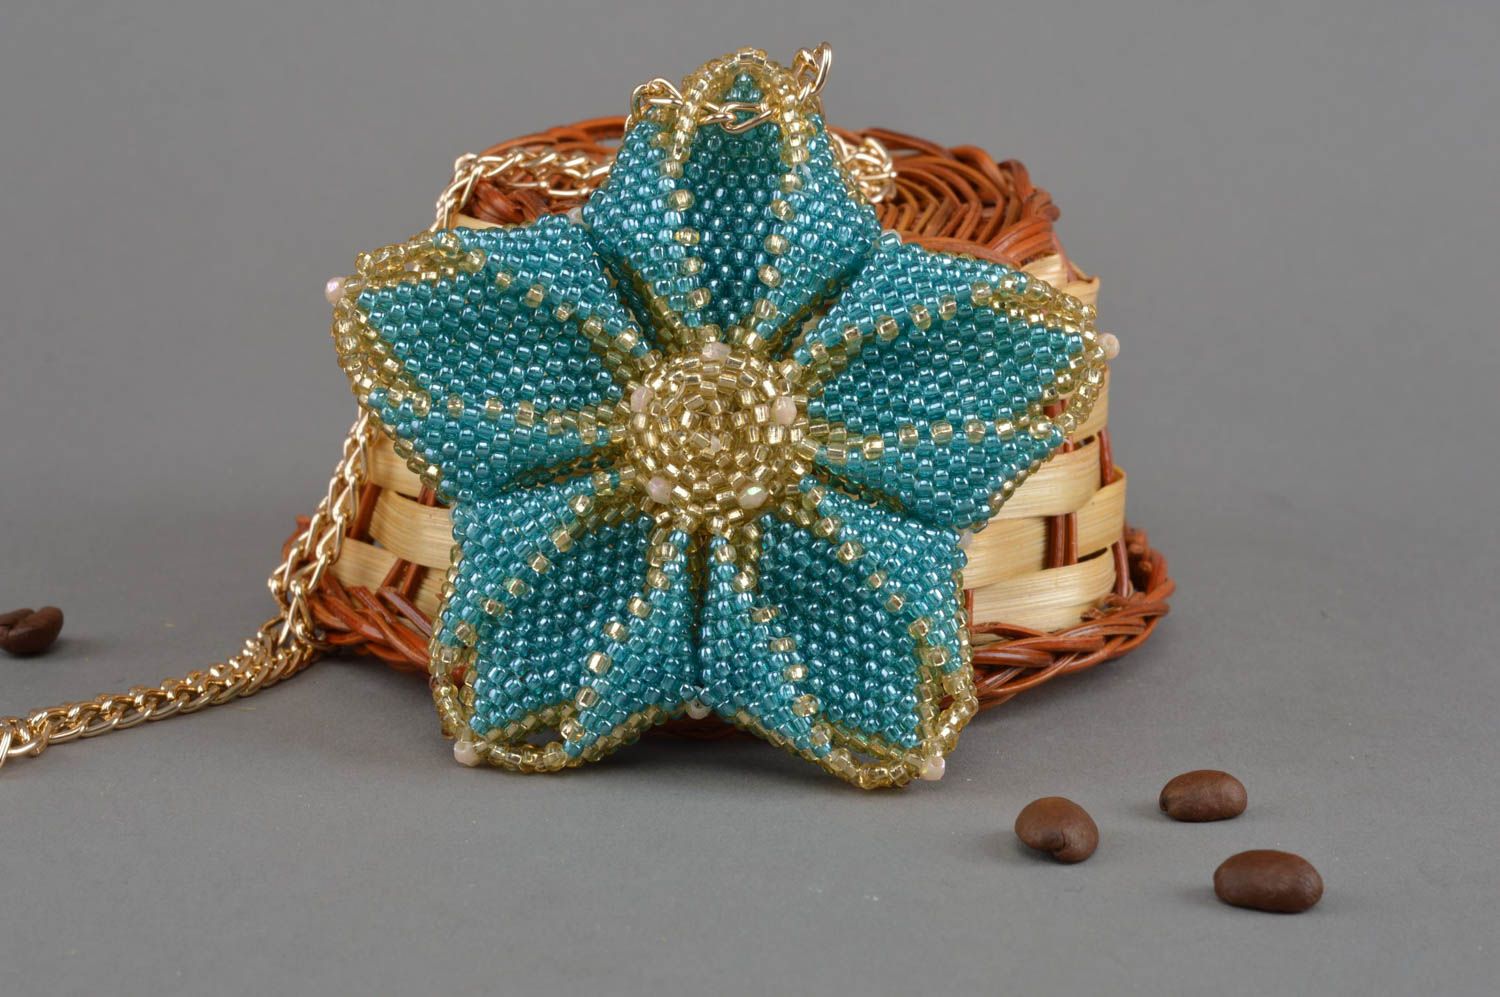 Beaded pendant seed bead flower accessory handmade jewelry for women photo 1